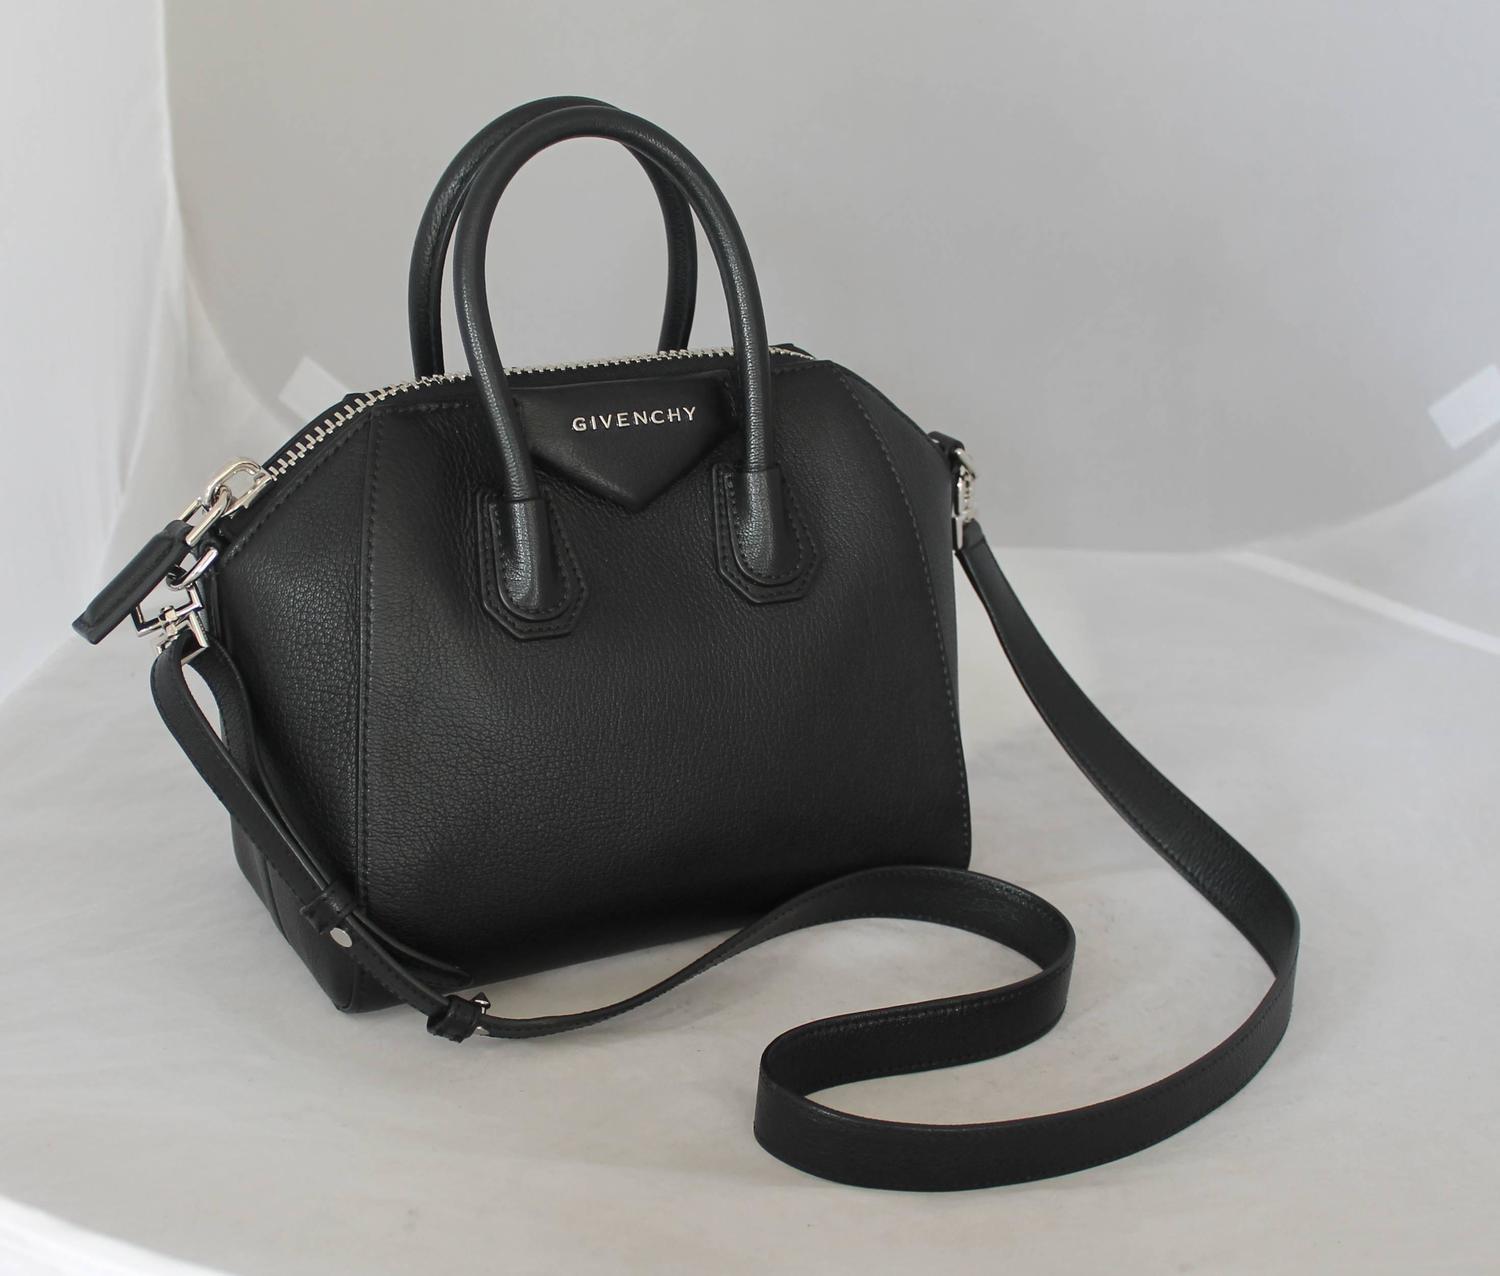 Givenchy Black Leather Mini Antigona Top Handle Crossbody Bag - SHW at 1stdibs